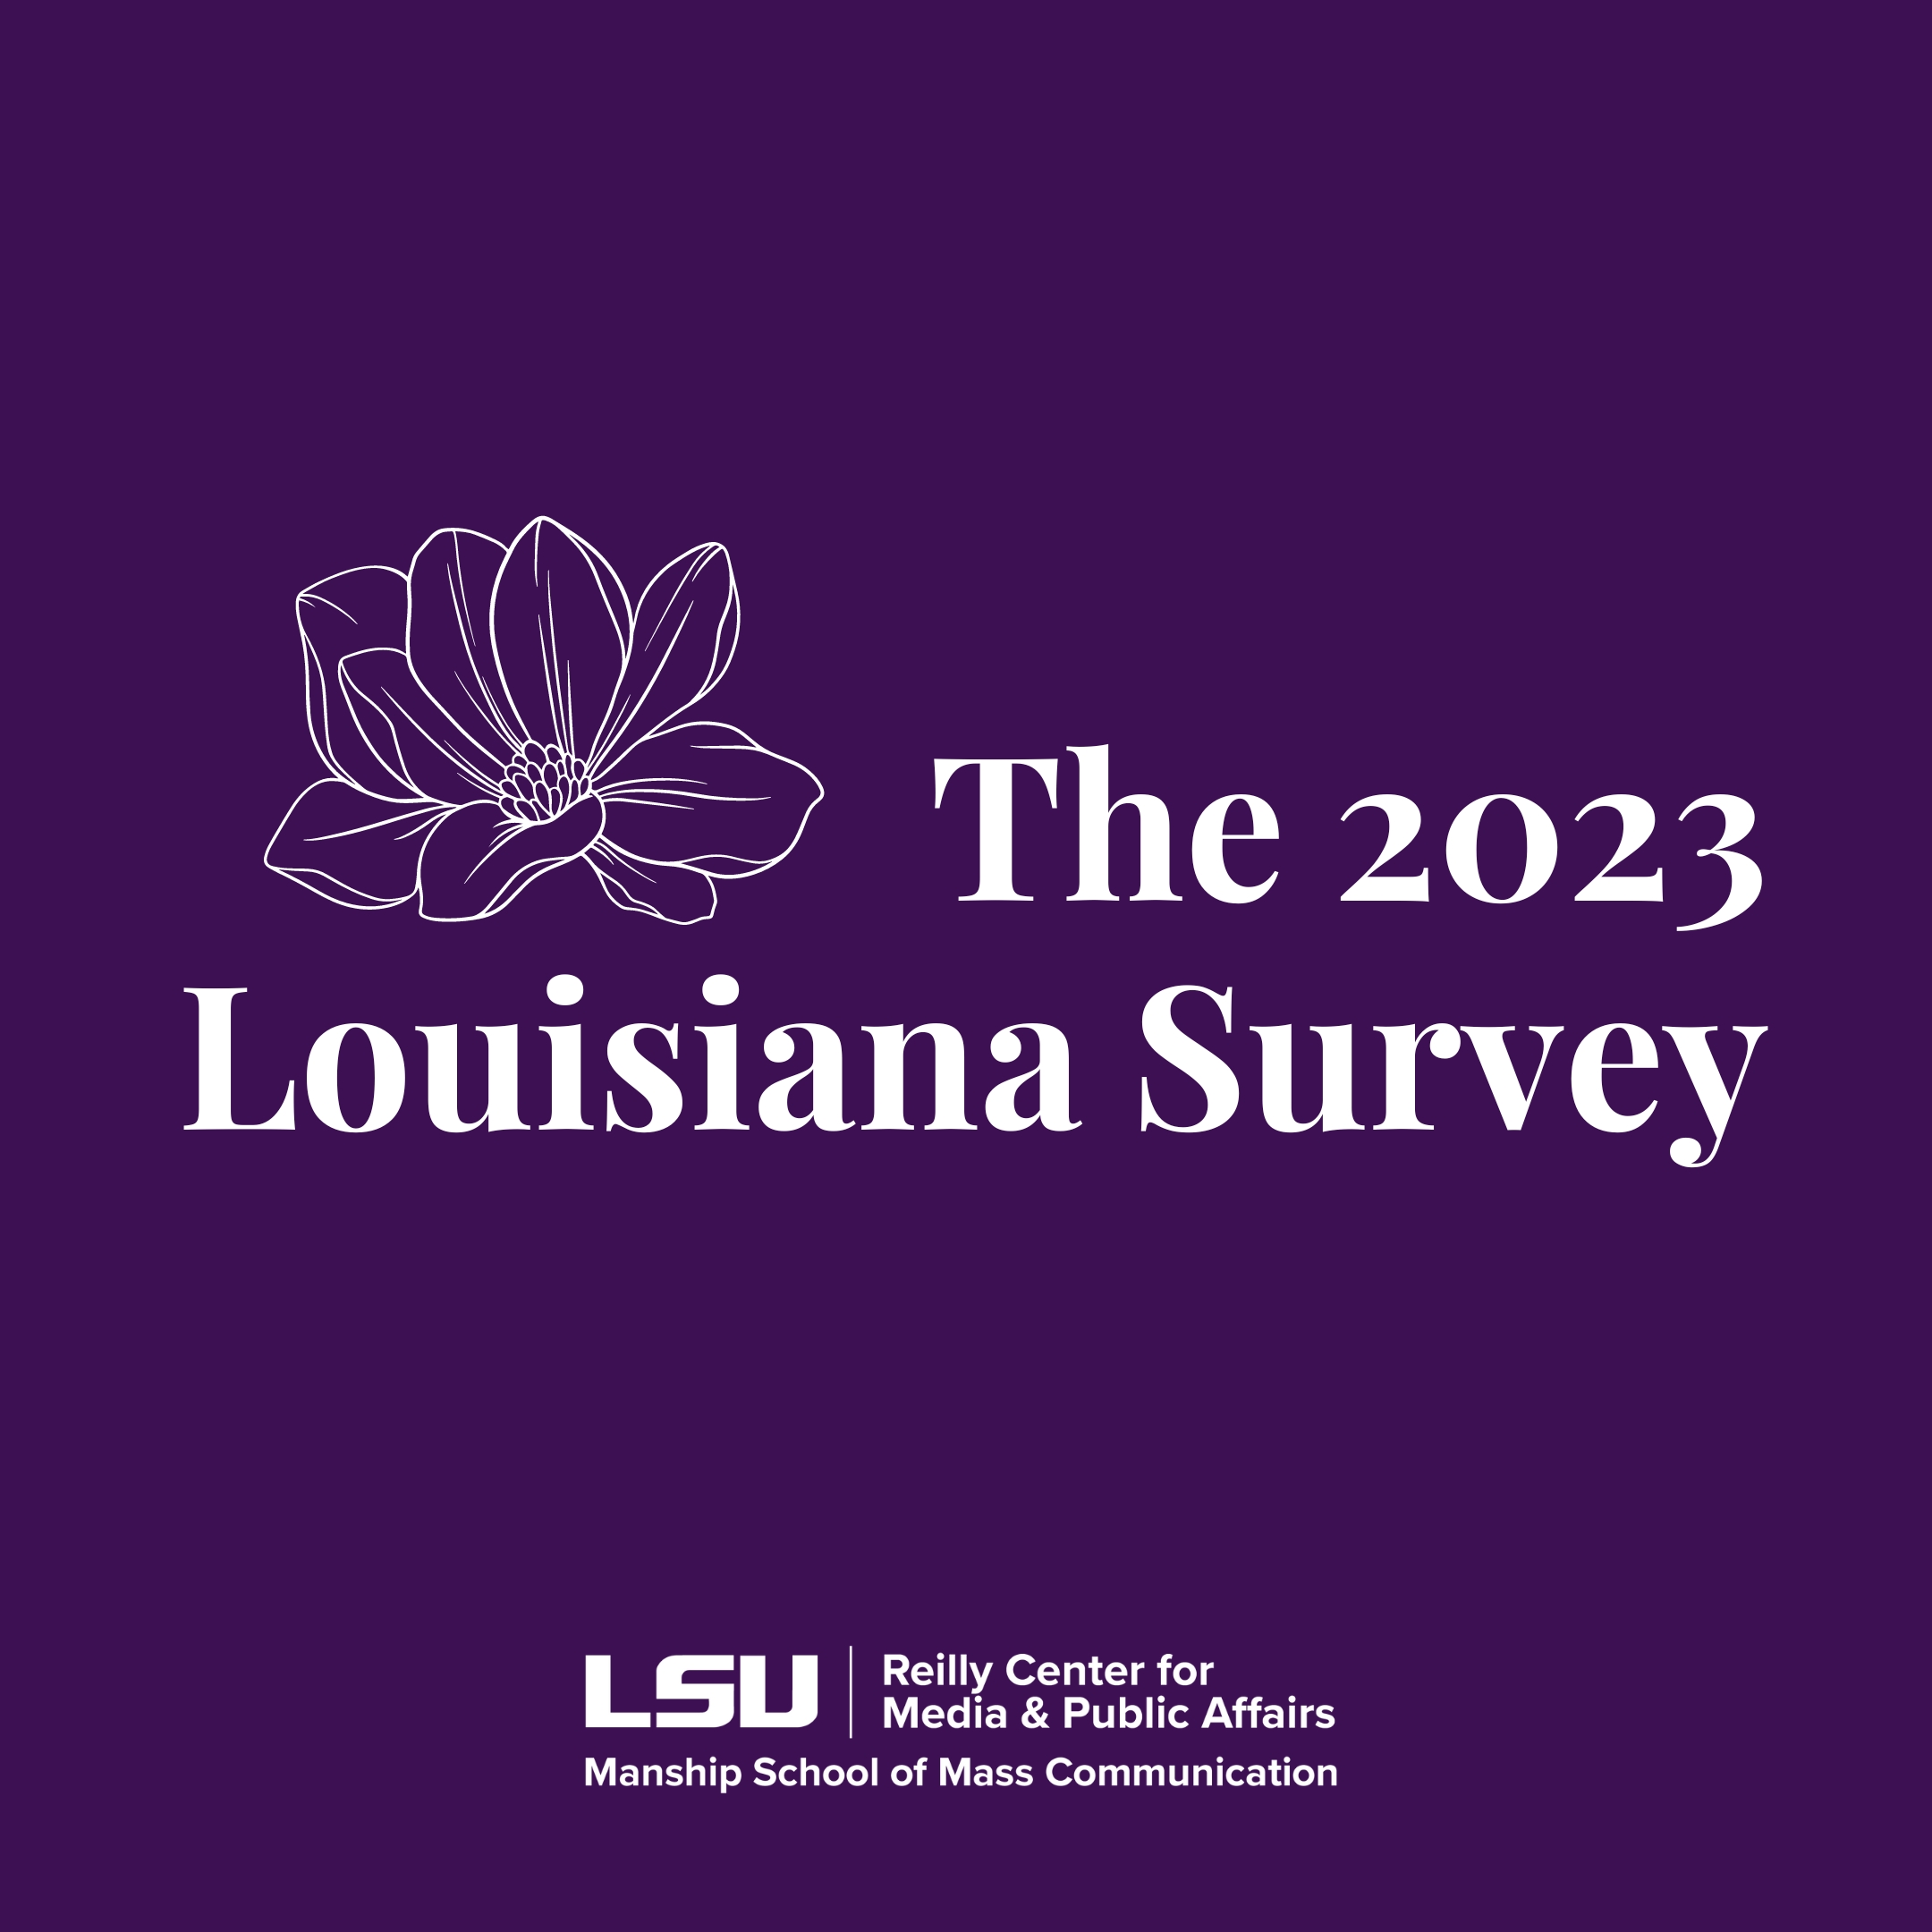 Crime Tops List of Public’s Concerns in 2023 Louisiana Survey by LSU Manship School